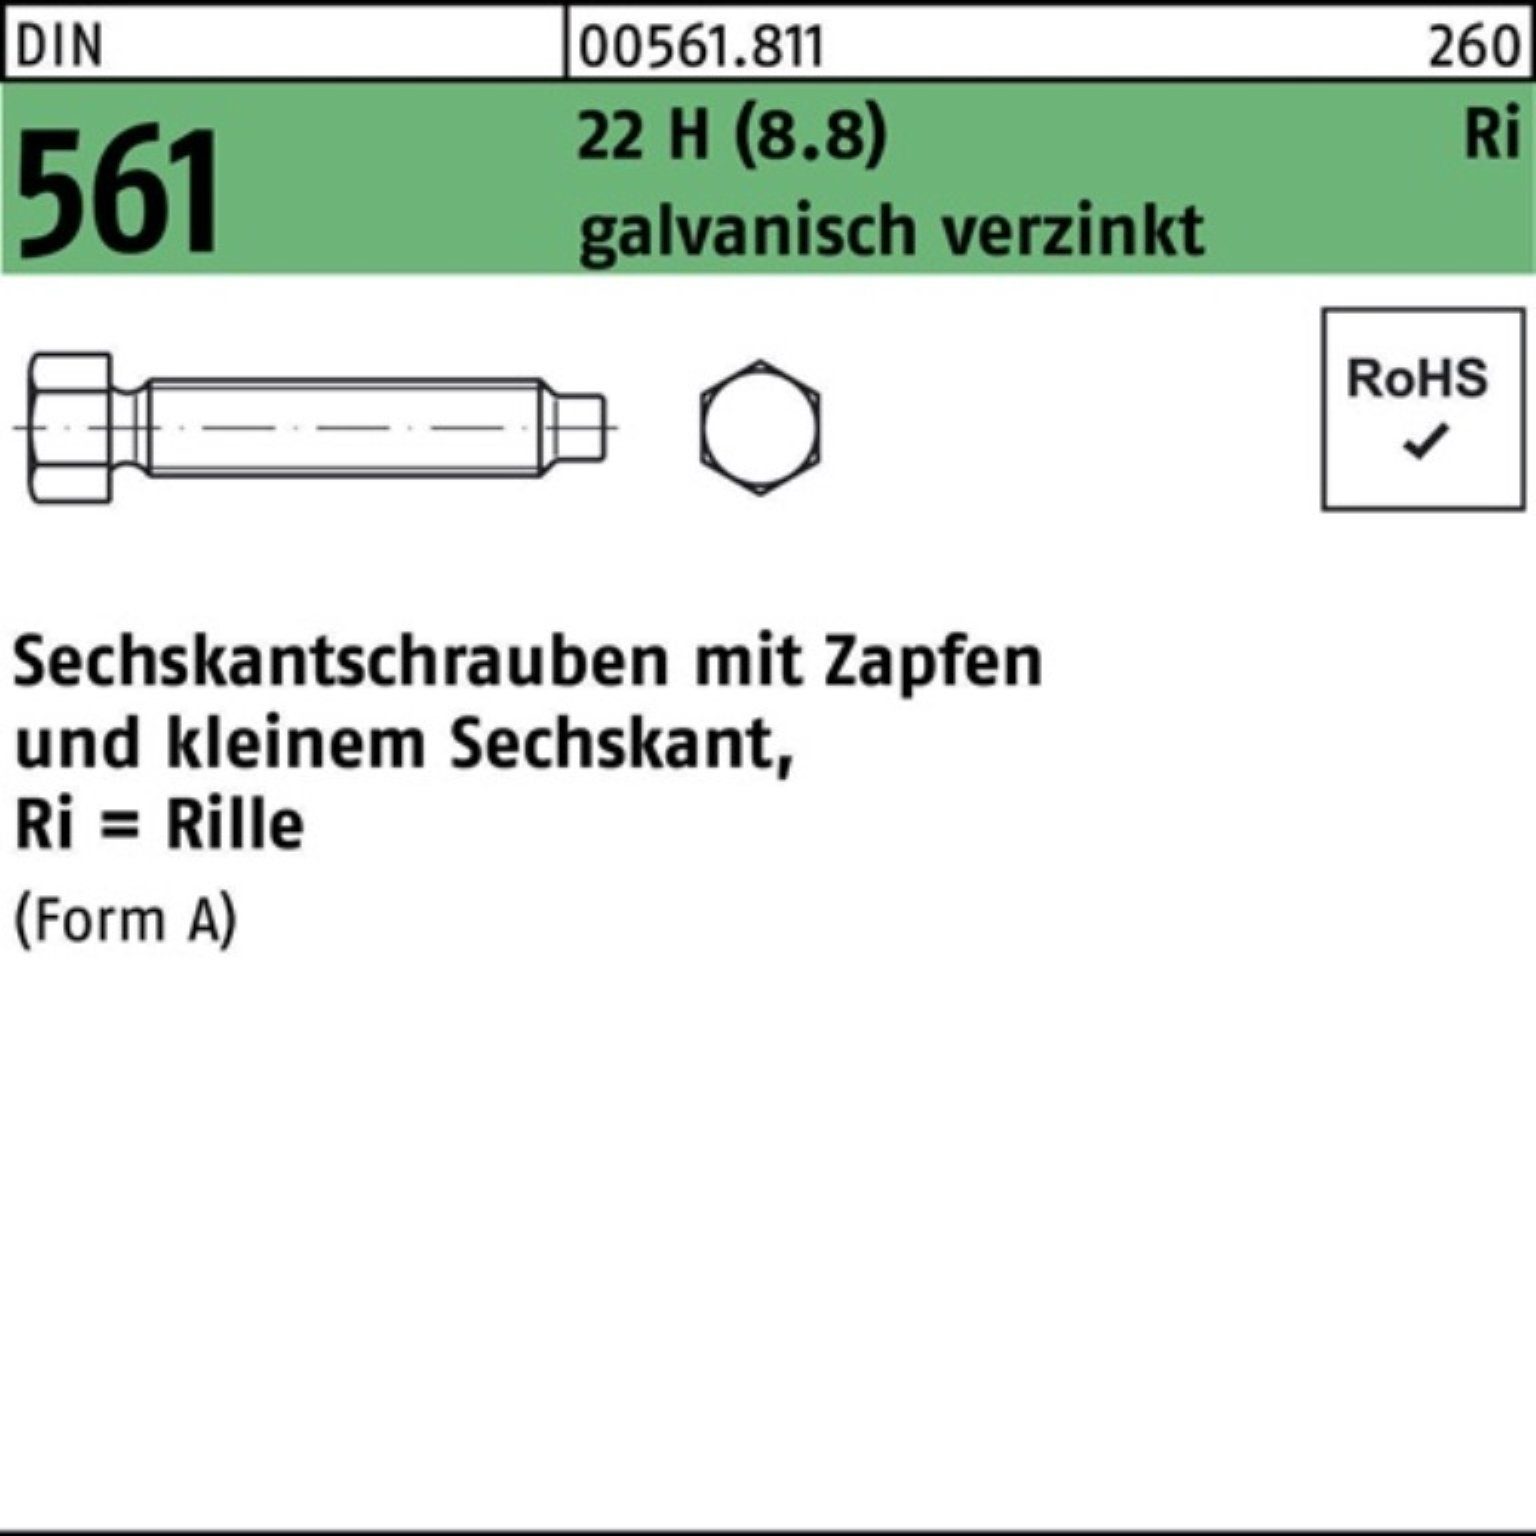 Reyher Sechskantschraube 100er Pack 561 galv. 16x100 Sechskantschraube H AM 22 Zapfen DIN (8.8)